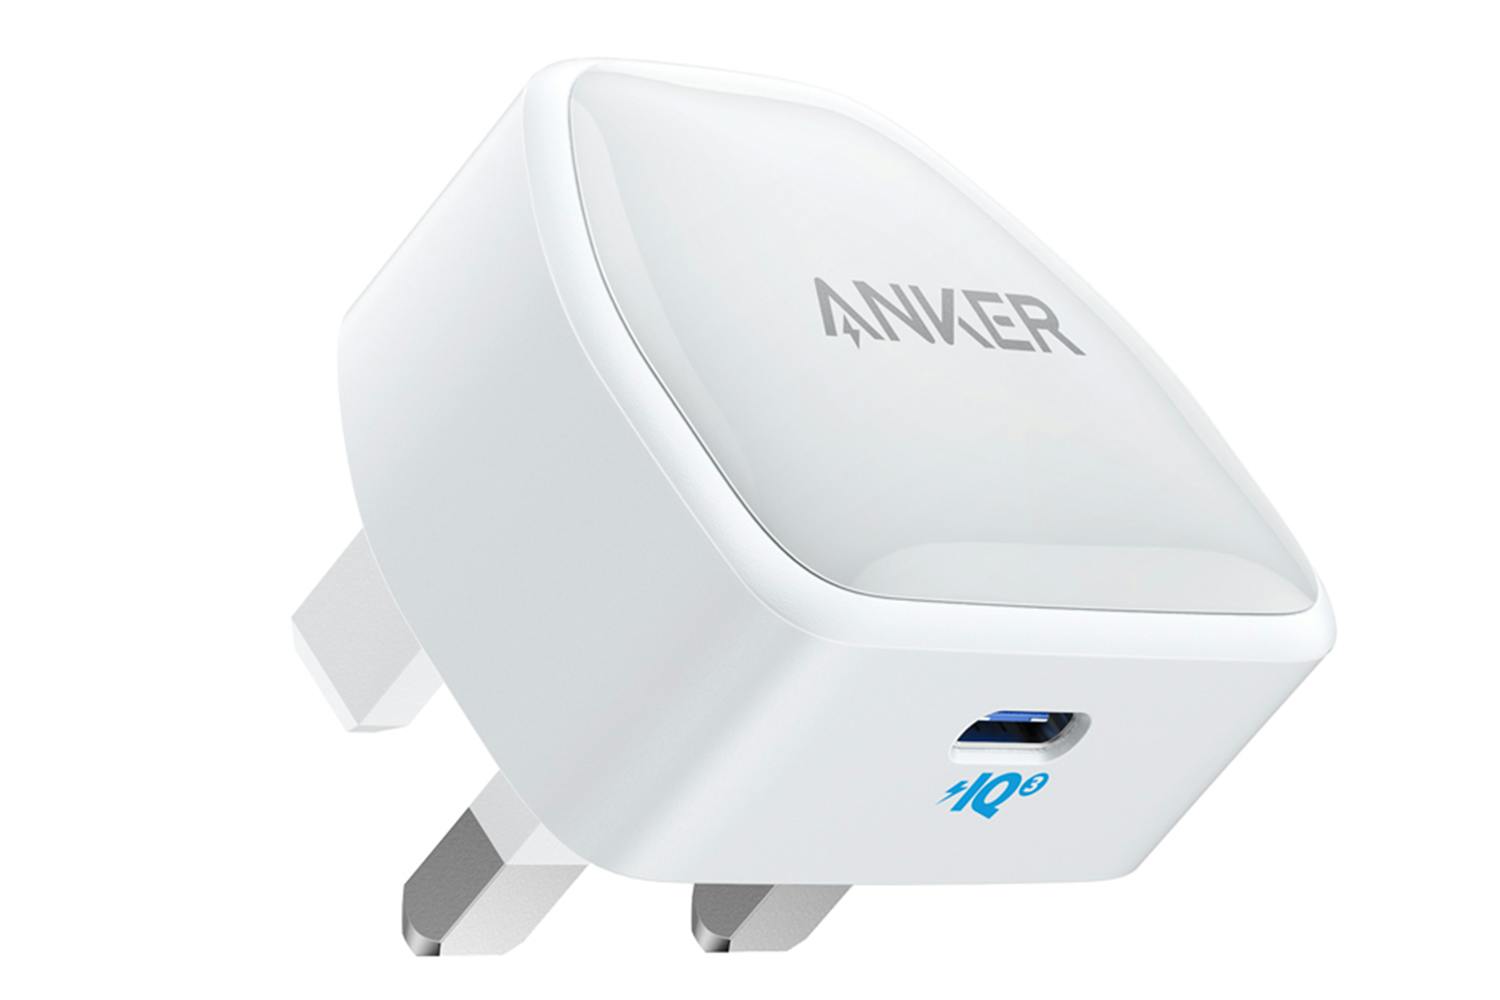 Anker PowerPort III Nano USB-C 20W Fast Charger